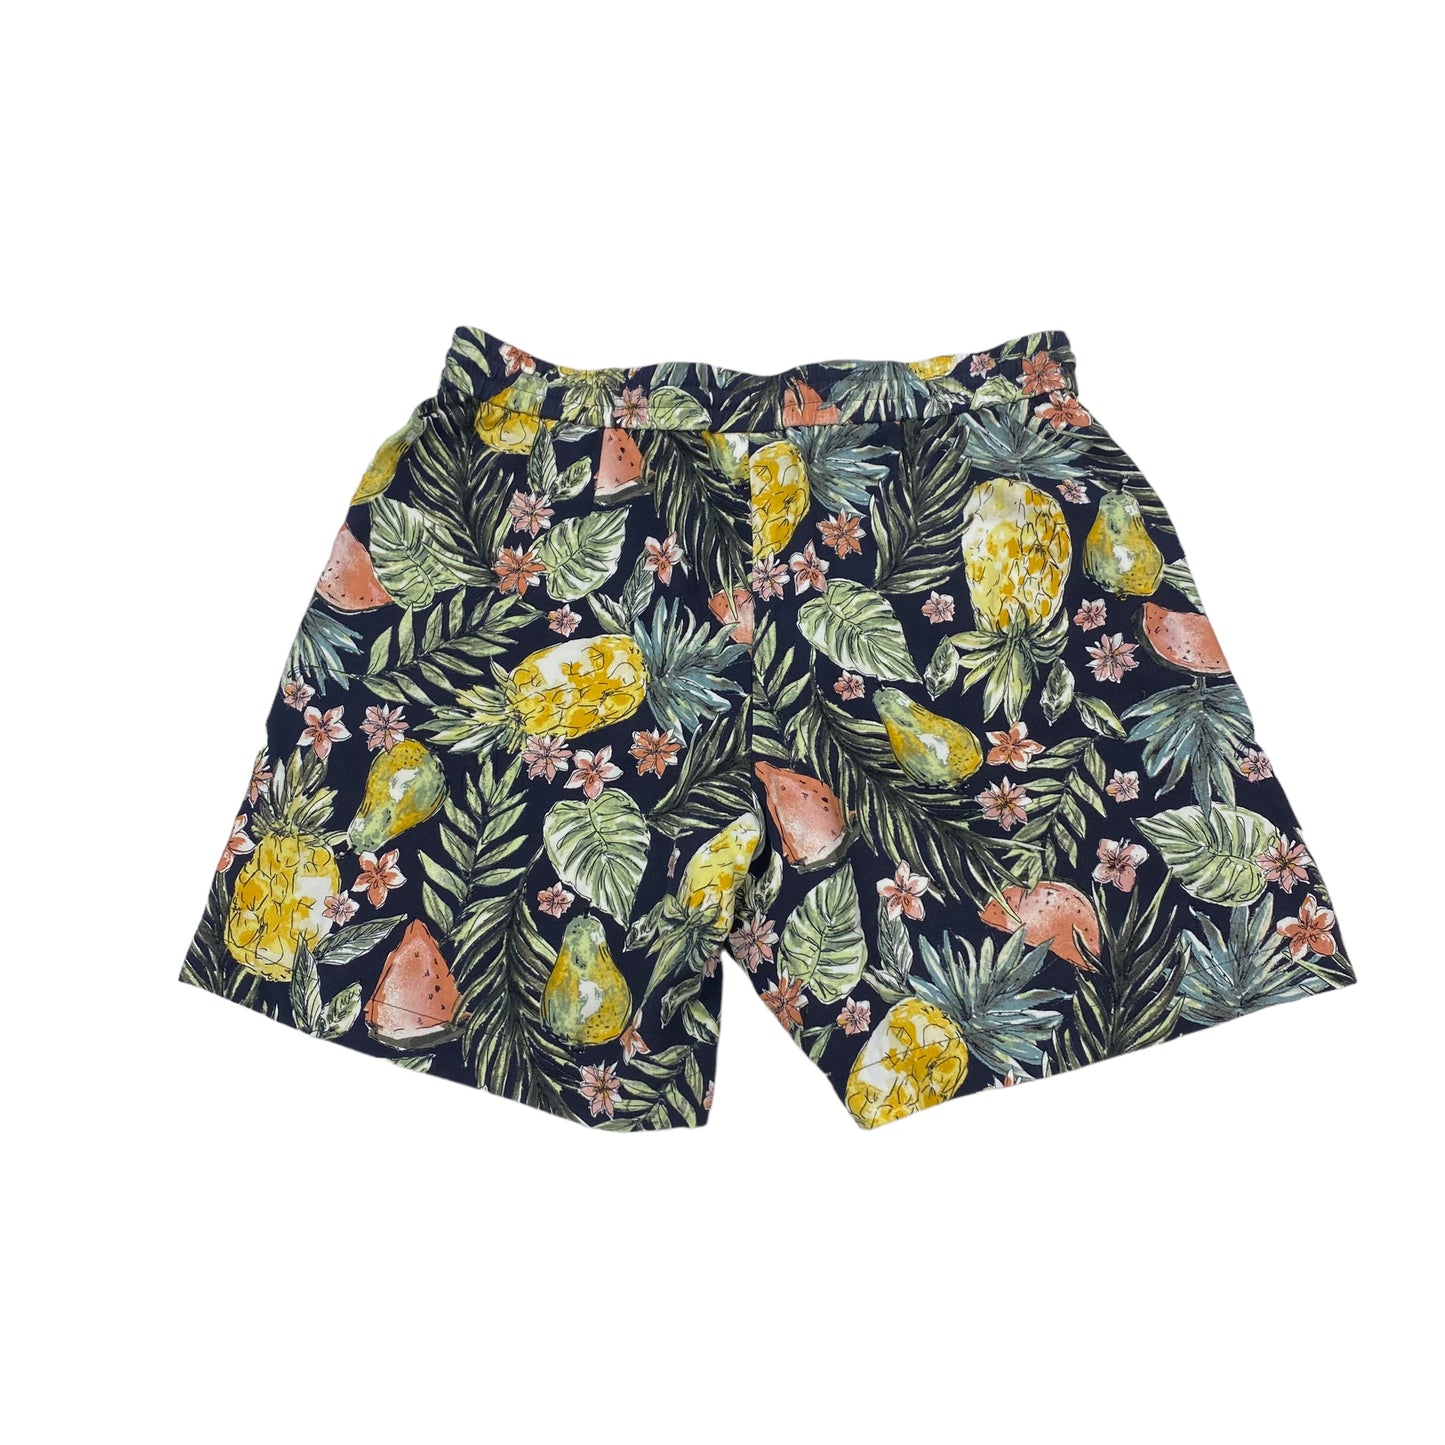 Shorts By J. Jill  Size: Xs